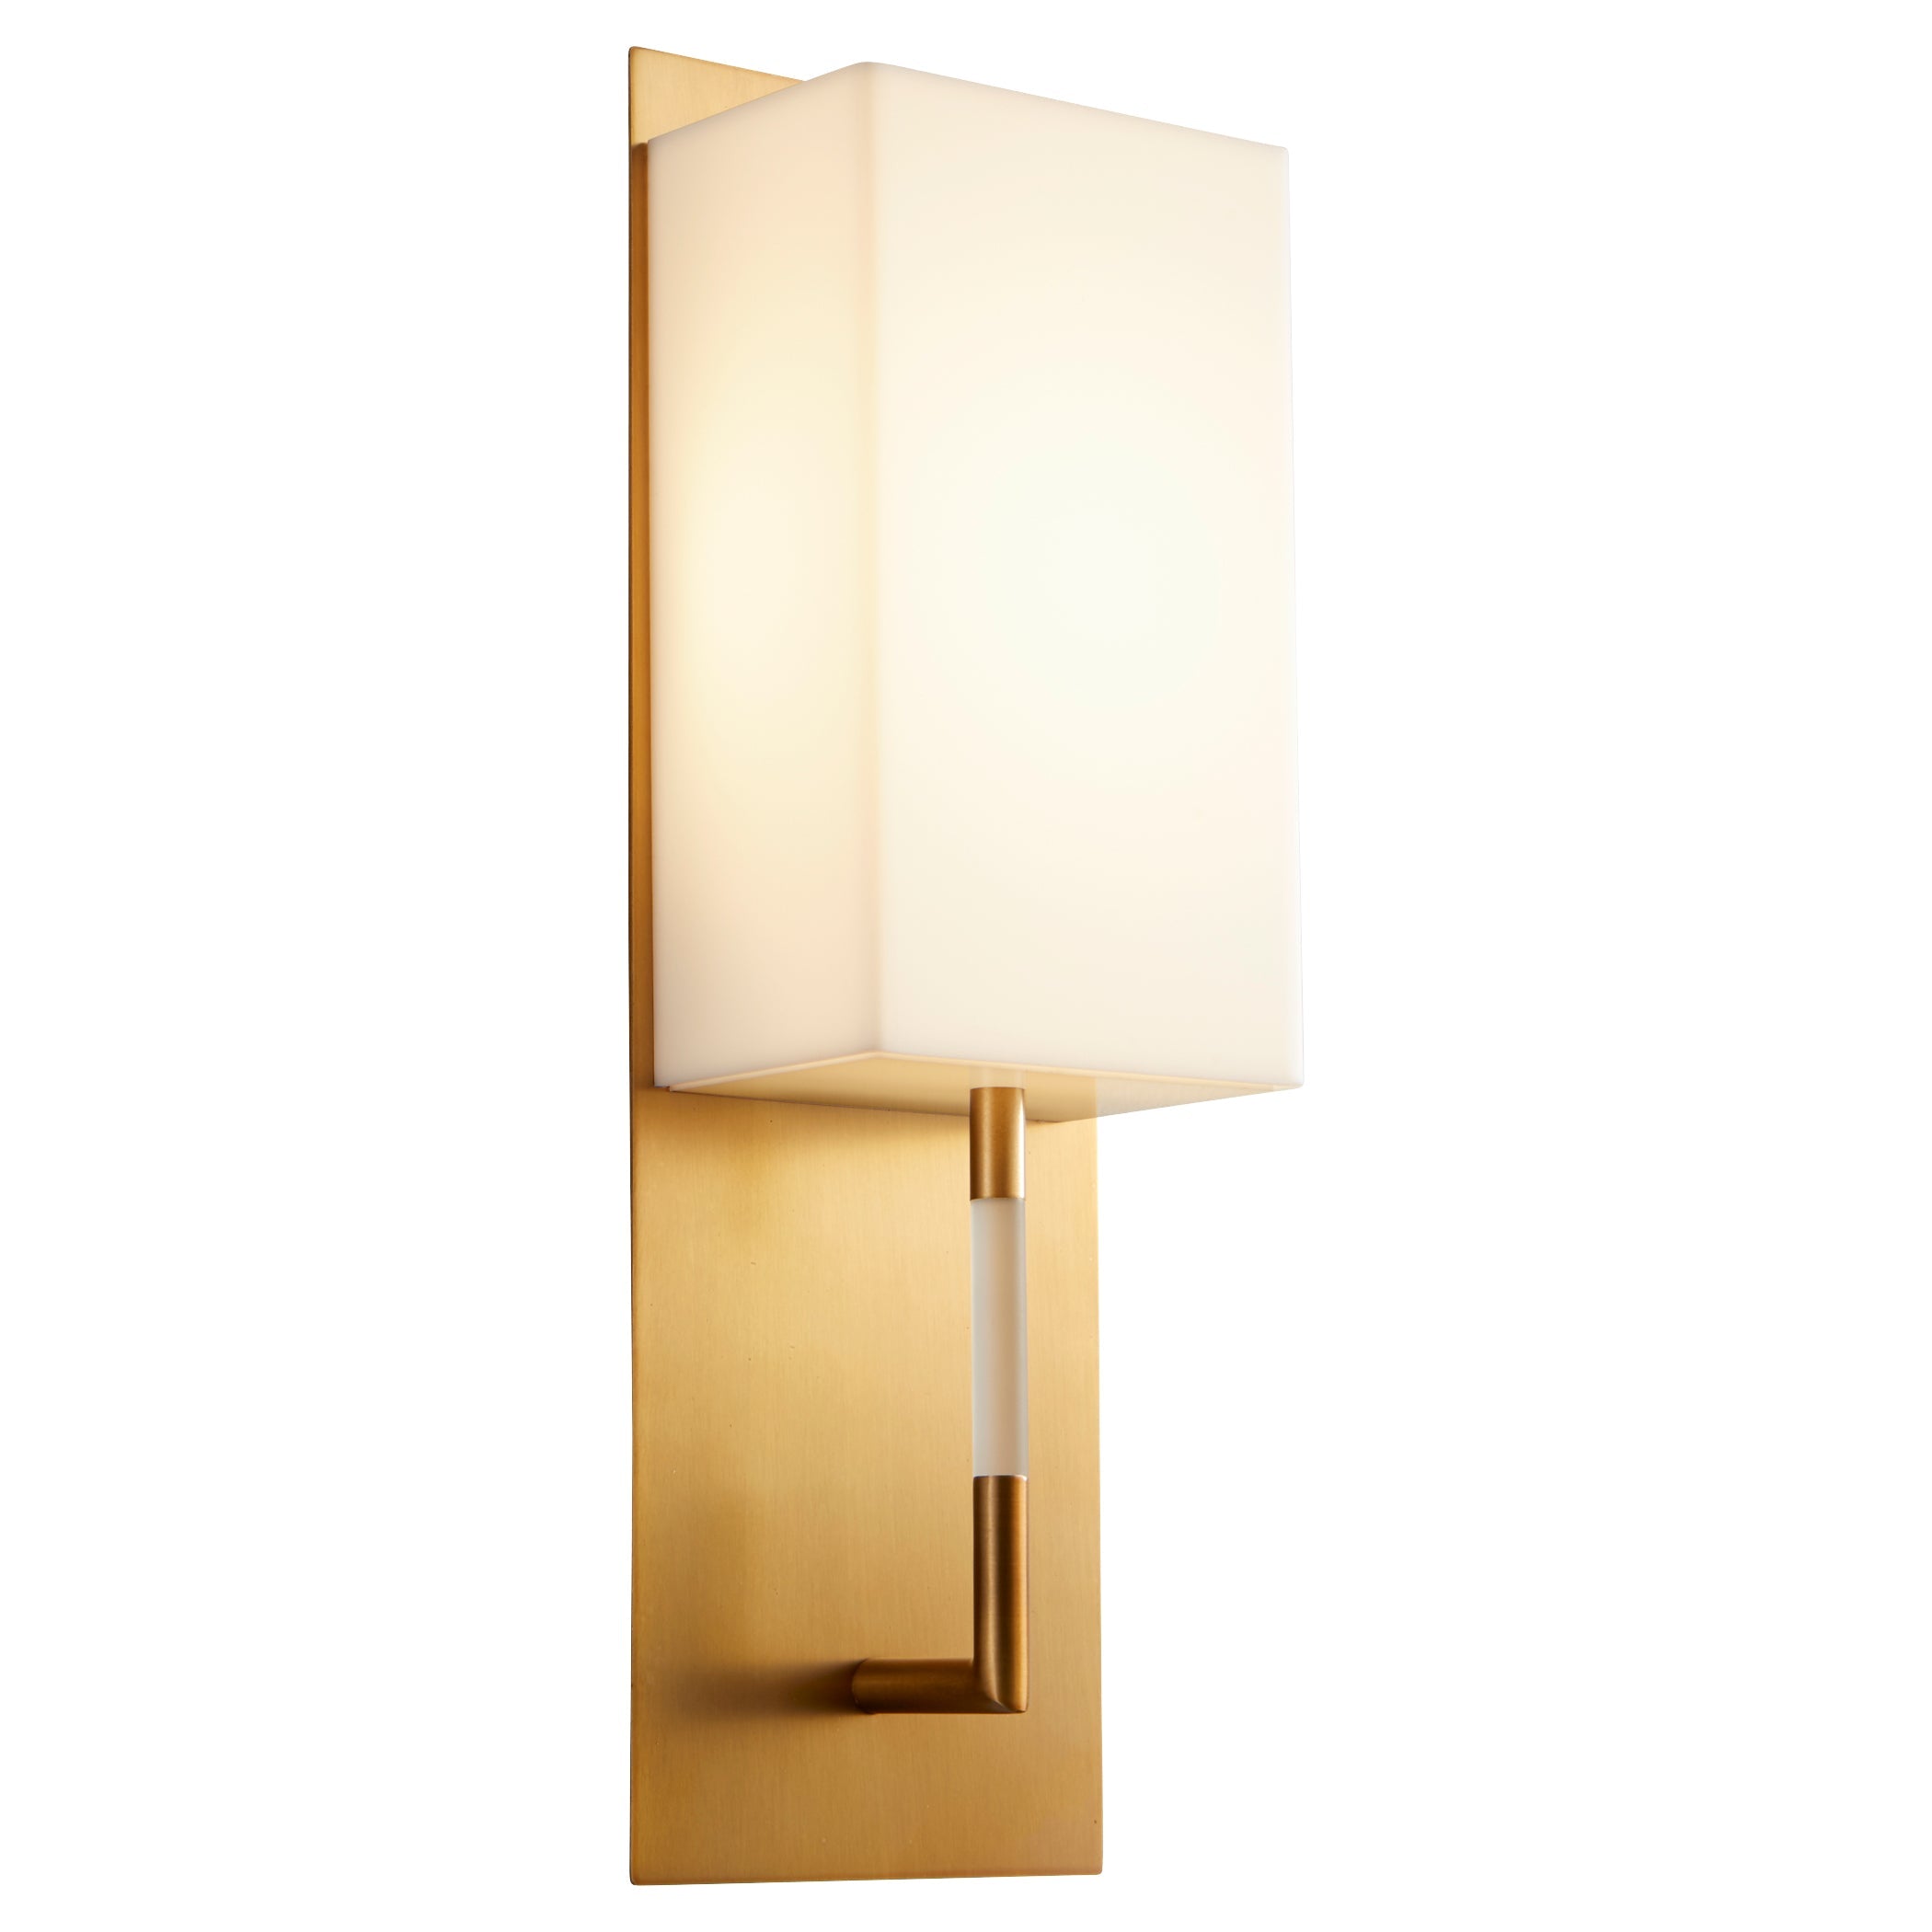 Oxygen Epoch 3-564-240 Modern Sconce Light Fixture - Aged Brass, Matte White Acrylic